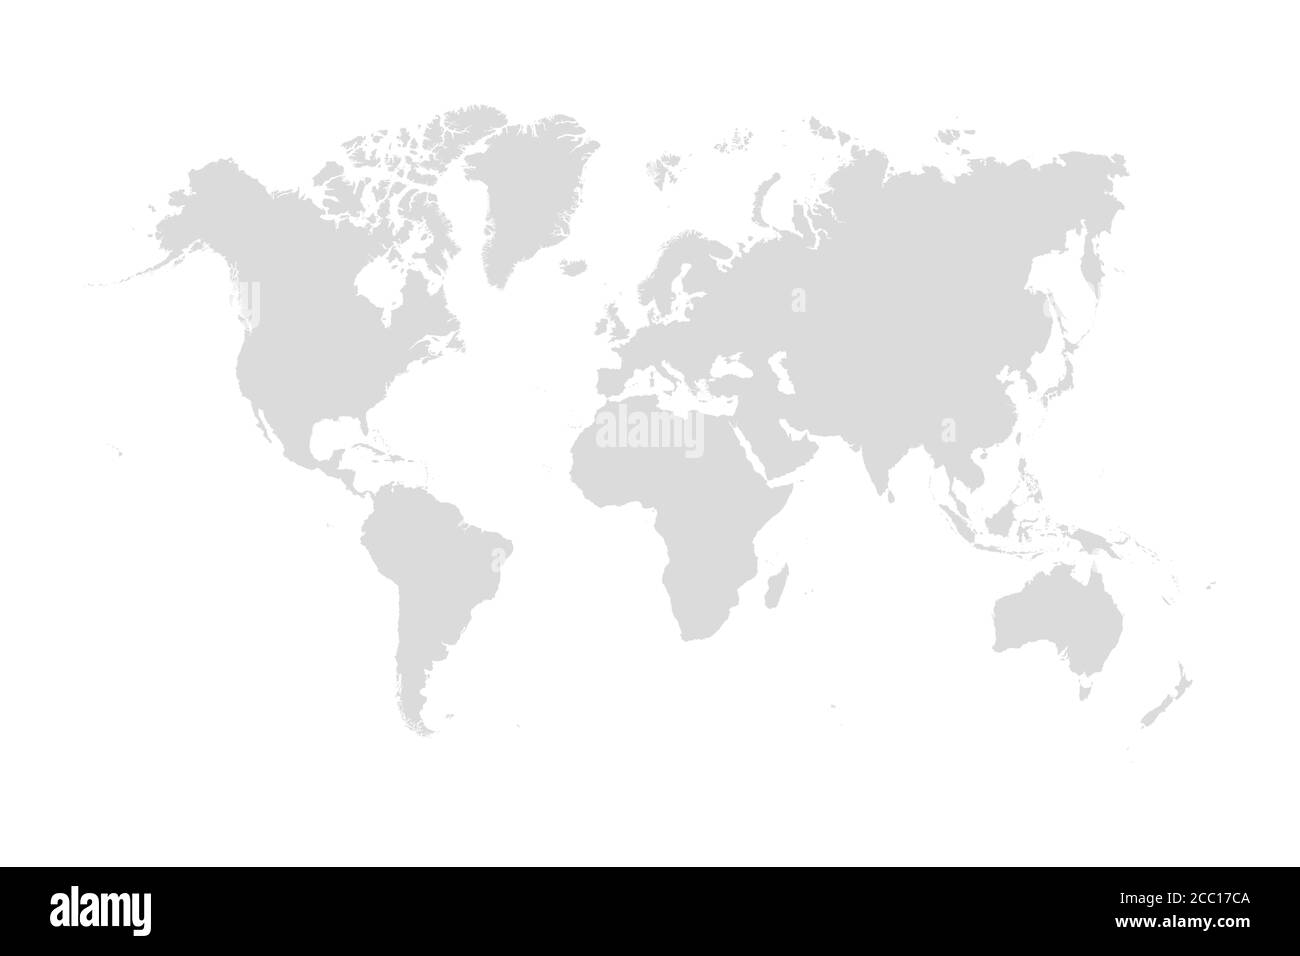 Weltkarte Vektor modern auf weiß Stock Vektor